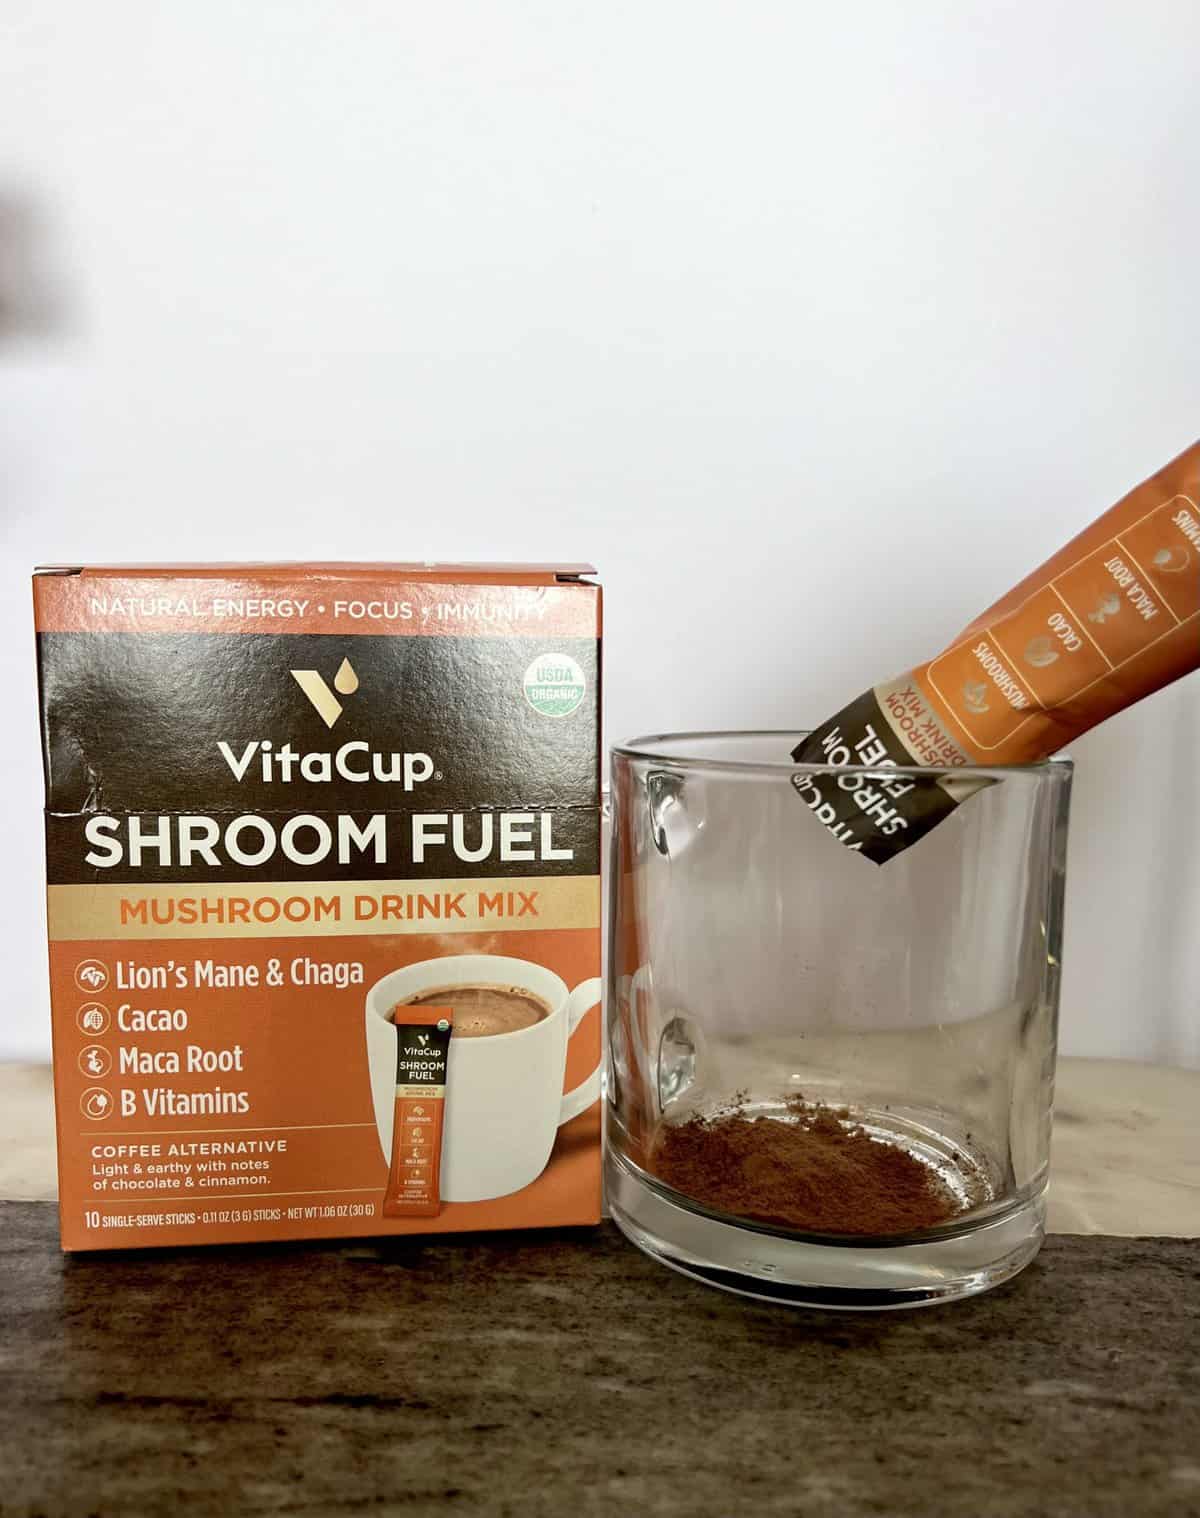 VitaCup-Shroom-Fuel-Mushroom-Based-Coffee-next-to-a-cup-of-coffee-powder-scaled